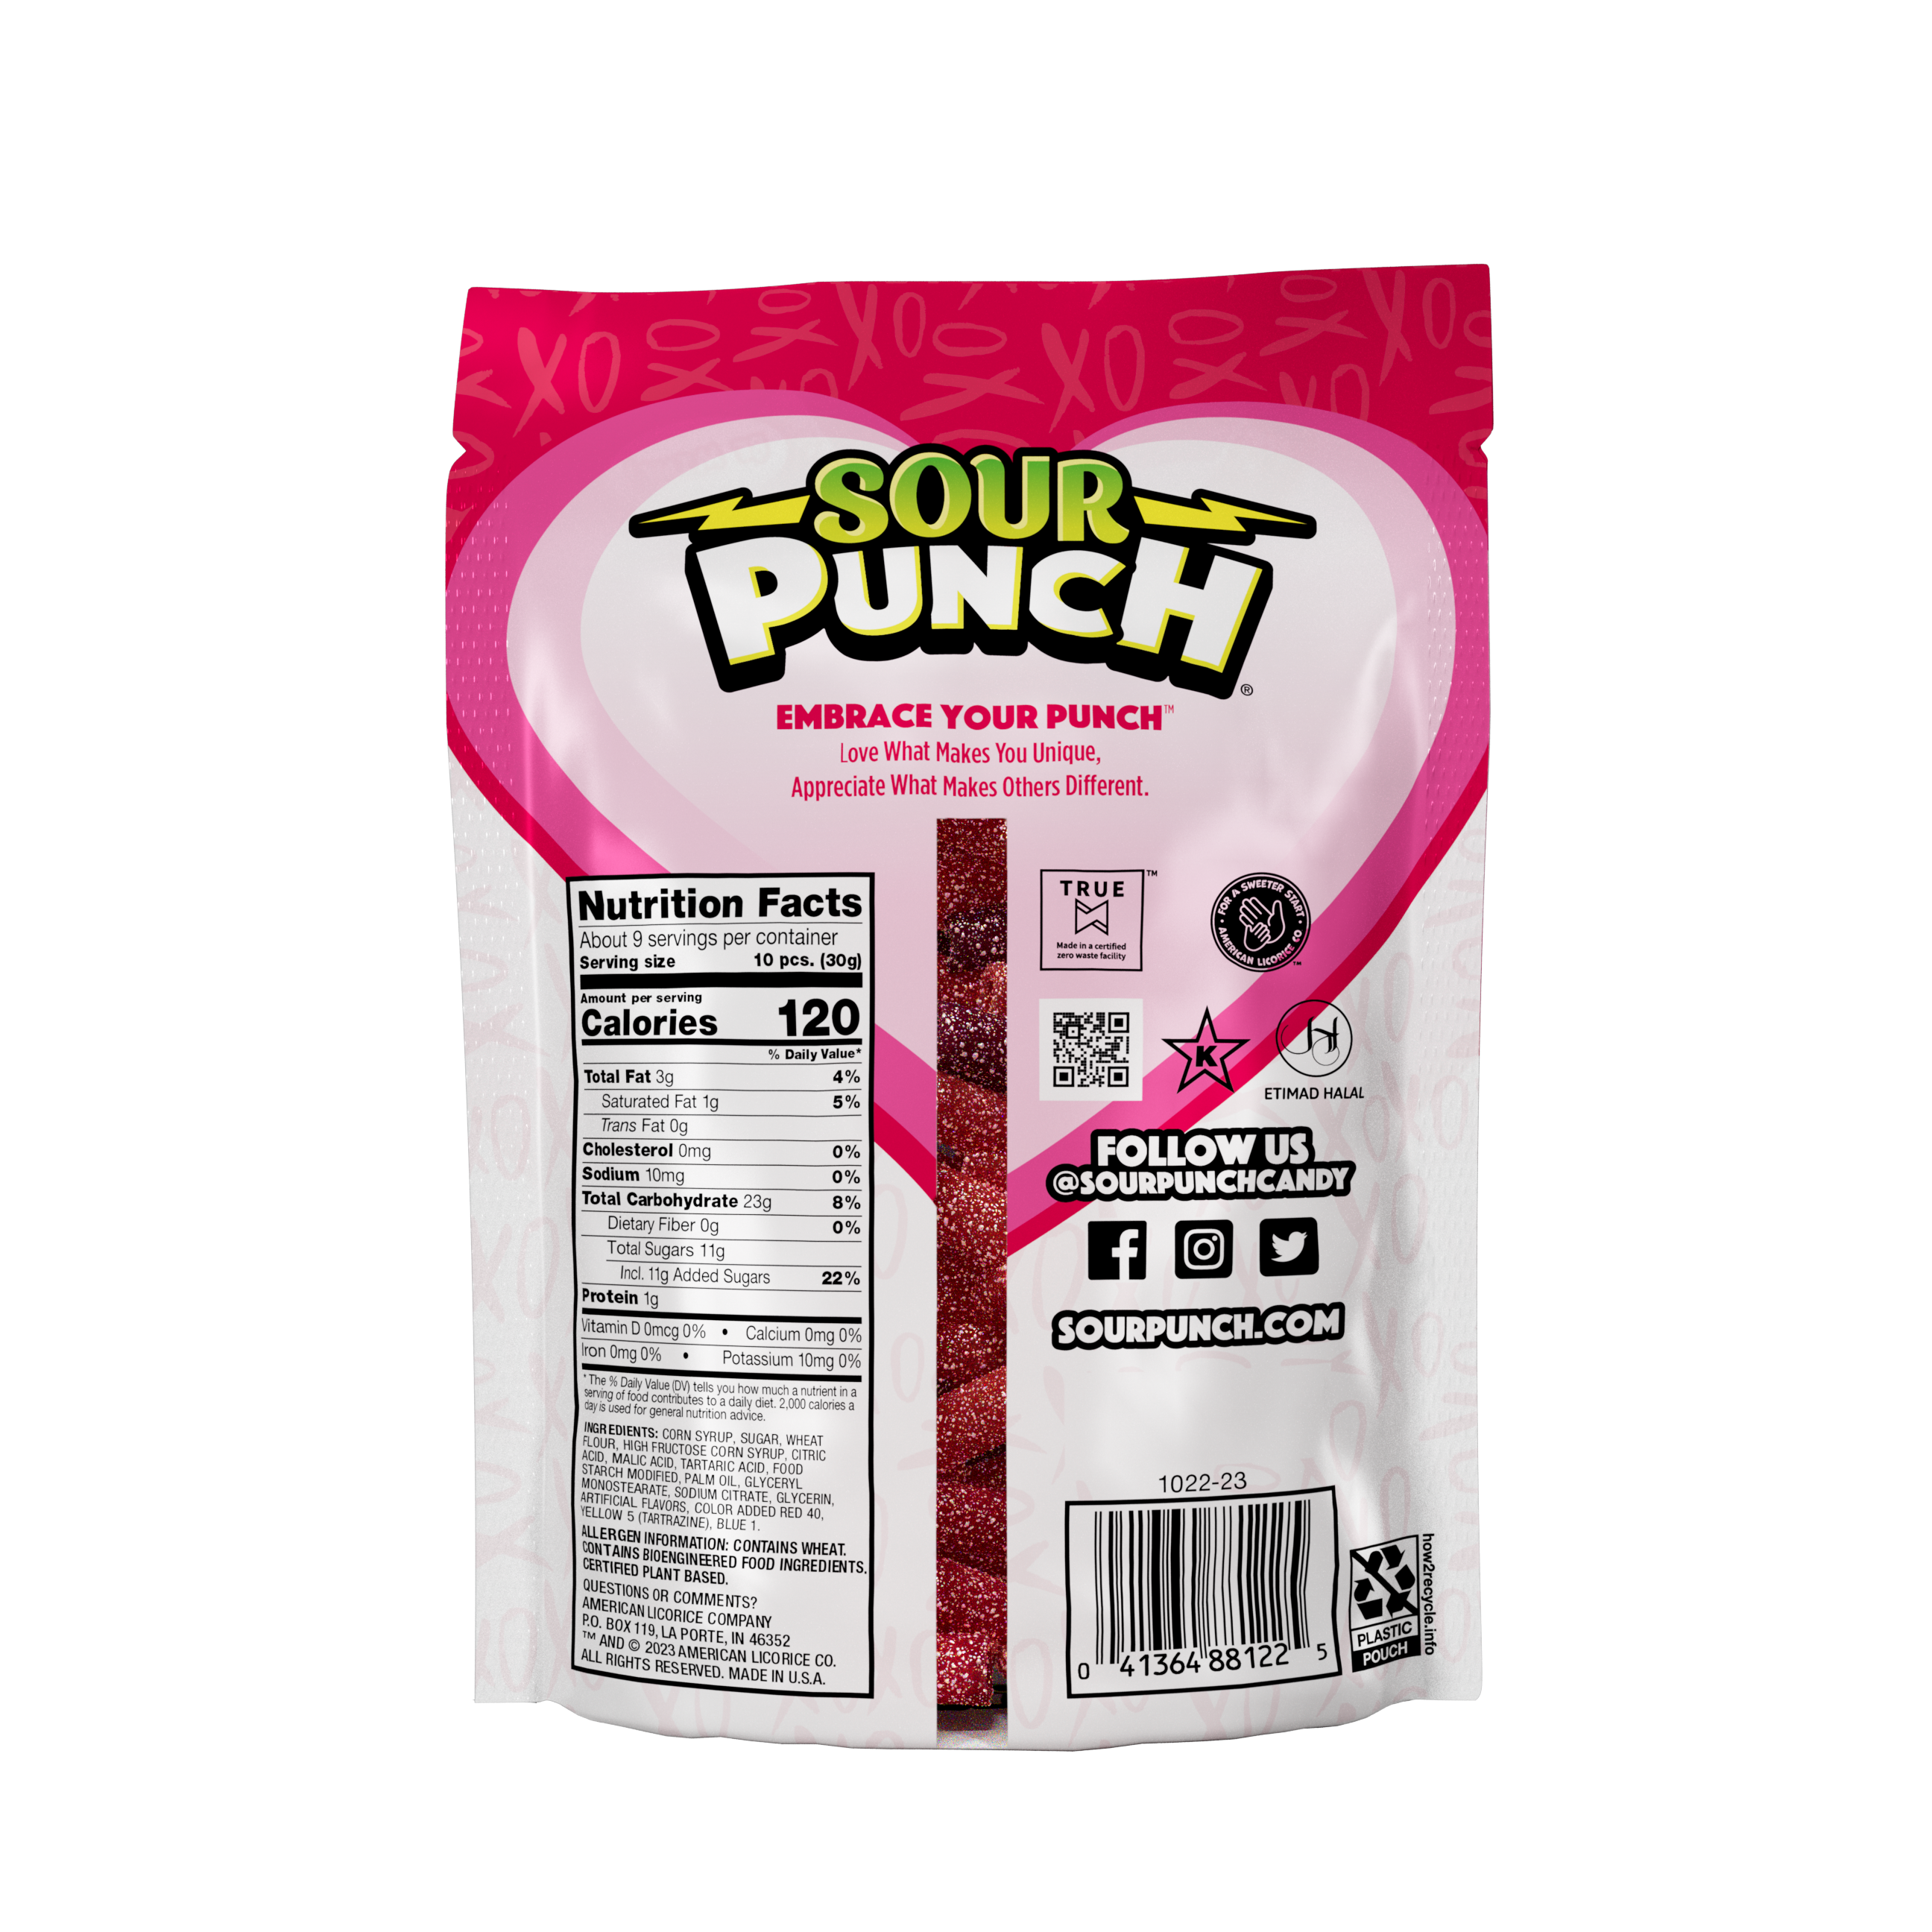 Sour Punch Bites® Valentine's Day Rad Reds Candy 9oz